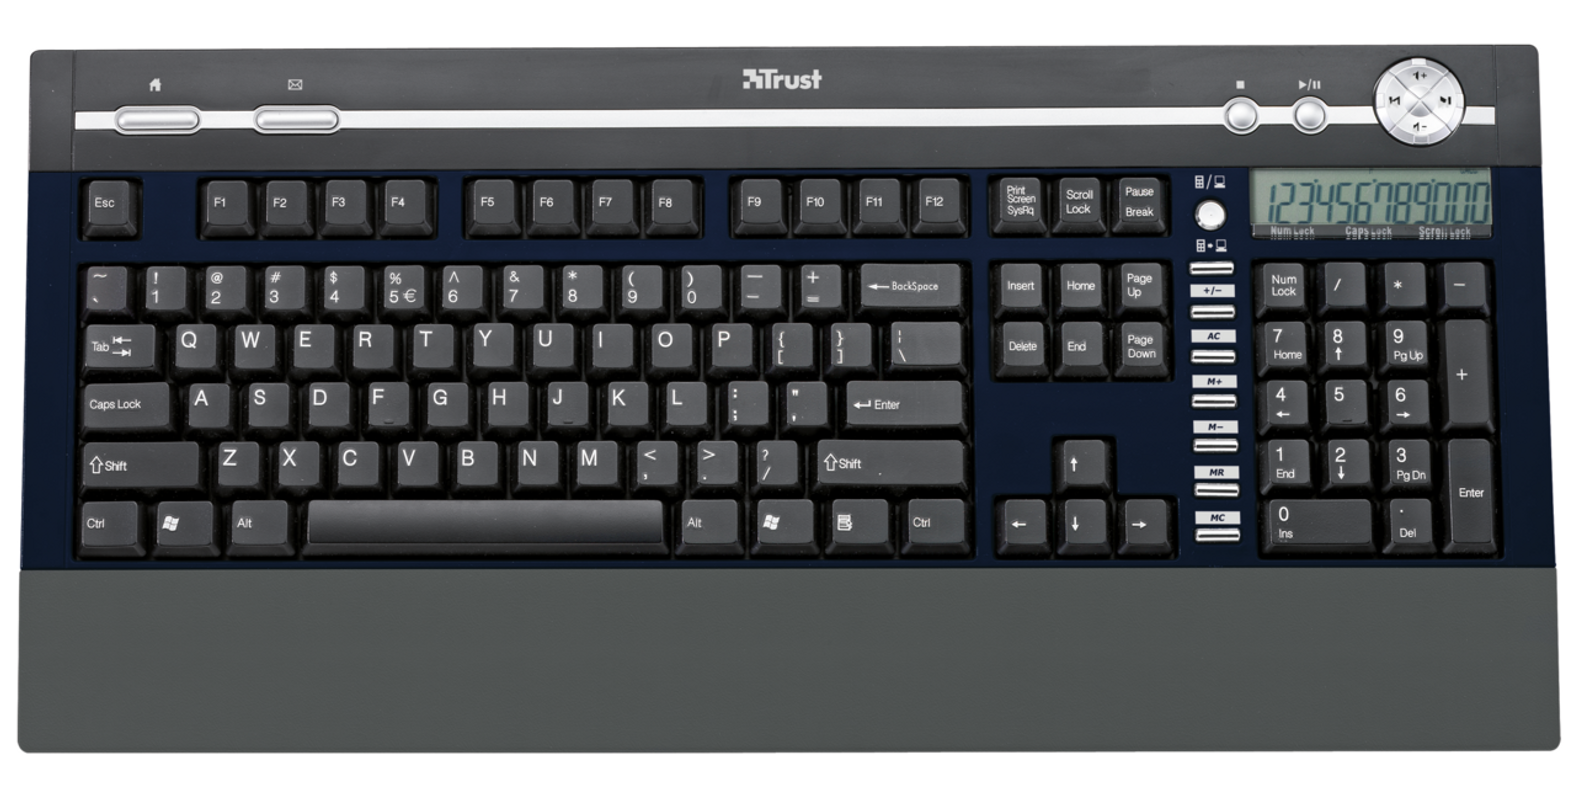 Calculator Keyboard KB-1600 IT-Top